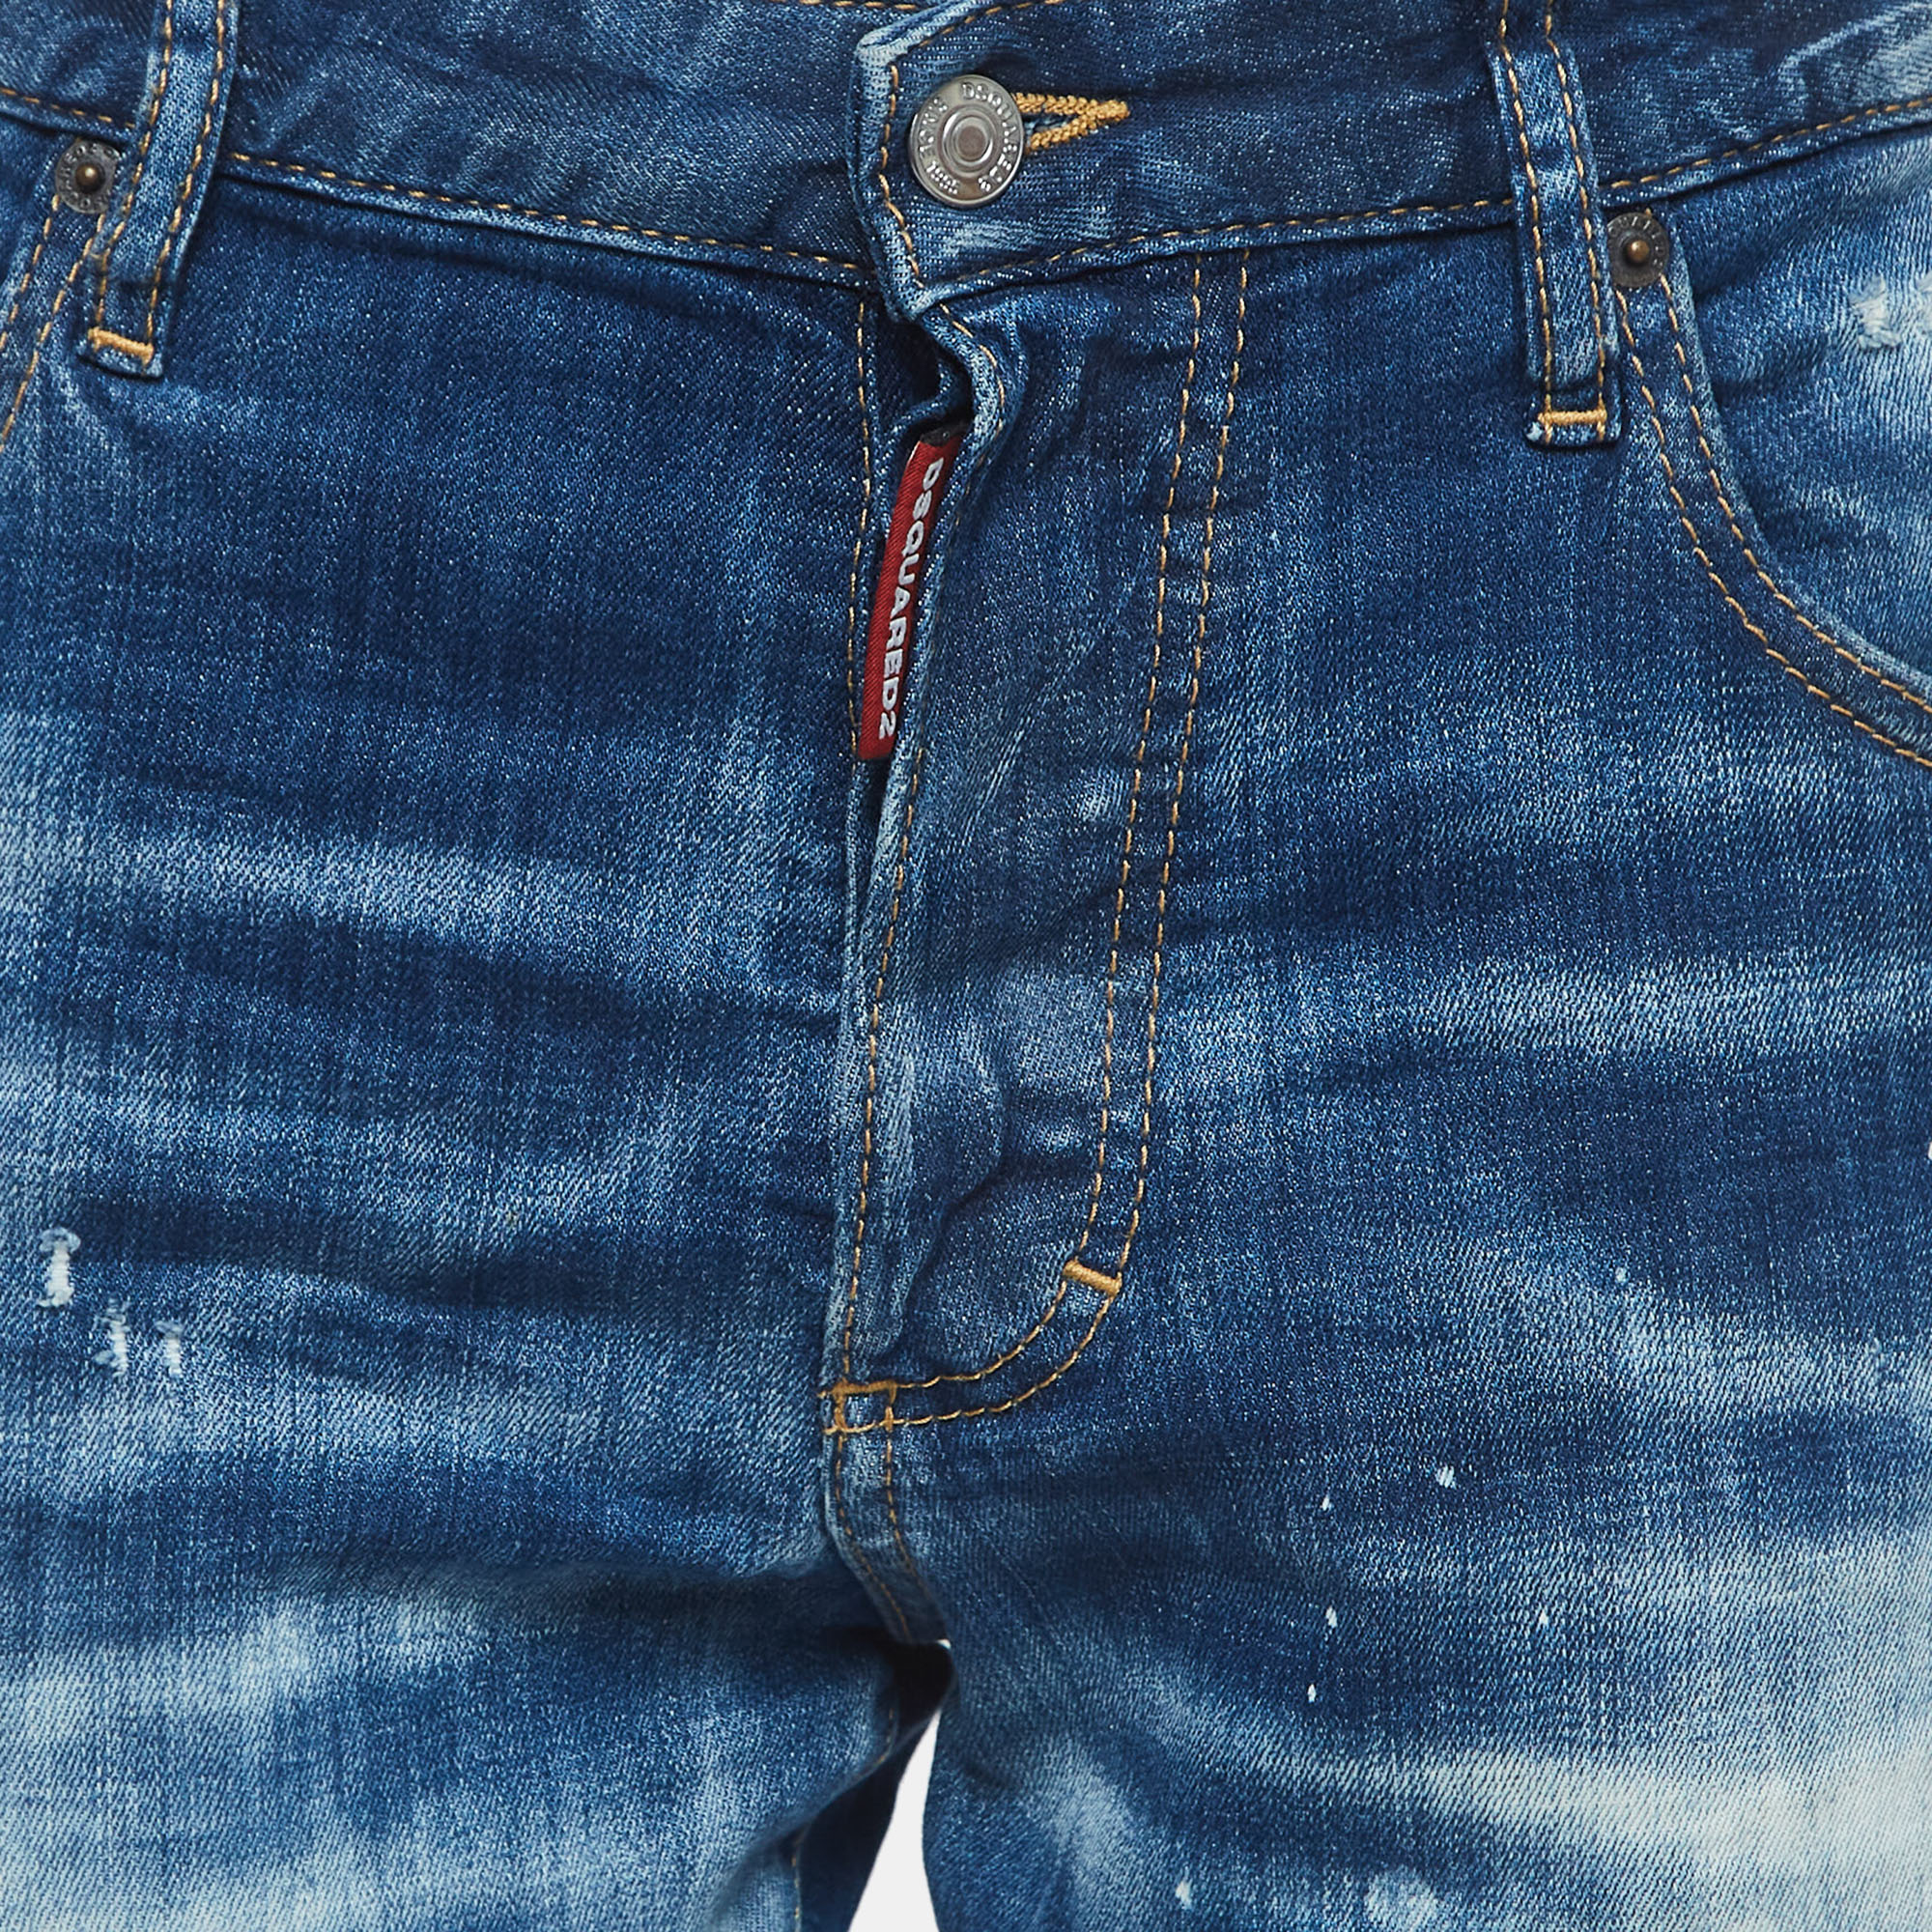 Dsquared2 Blue Washed & Distressed Denim Skinny Dan Jeans S